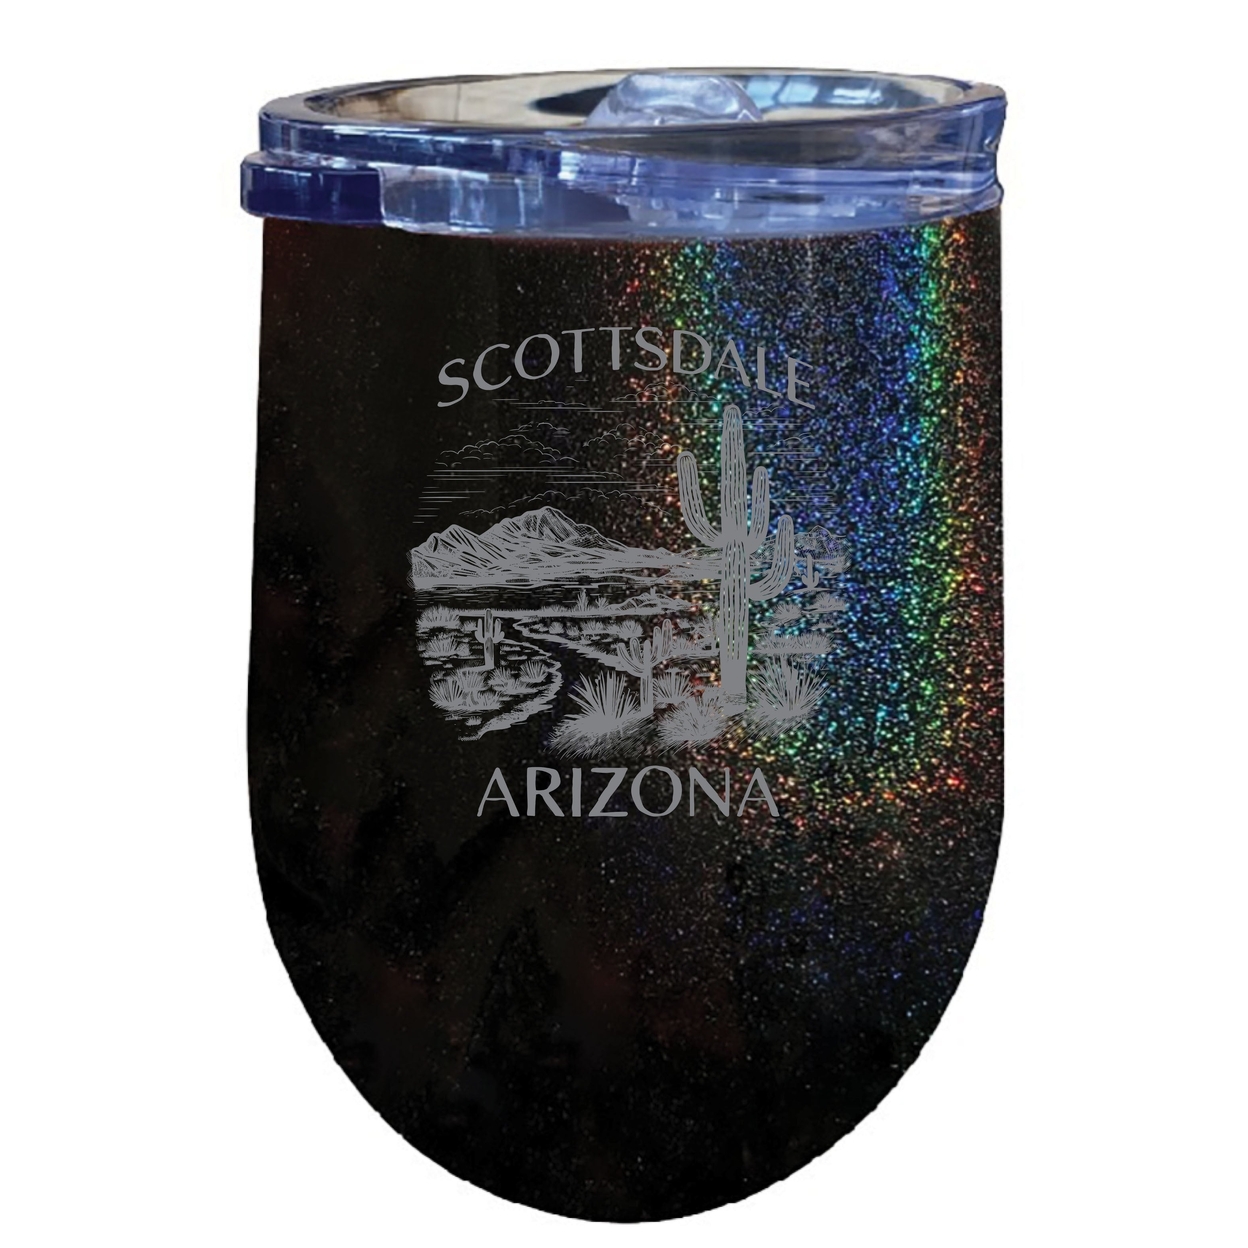 Scottsdale Arizona Souvenir 12 Oz Engraved Insulated Wine Stainless Steel Tumbler - White,,Single Unit